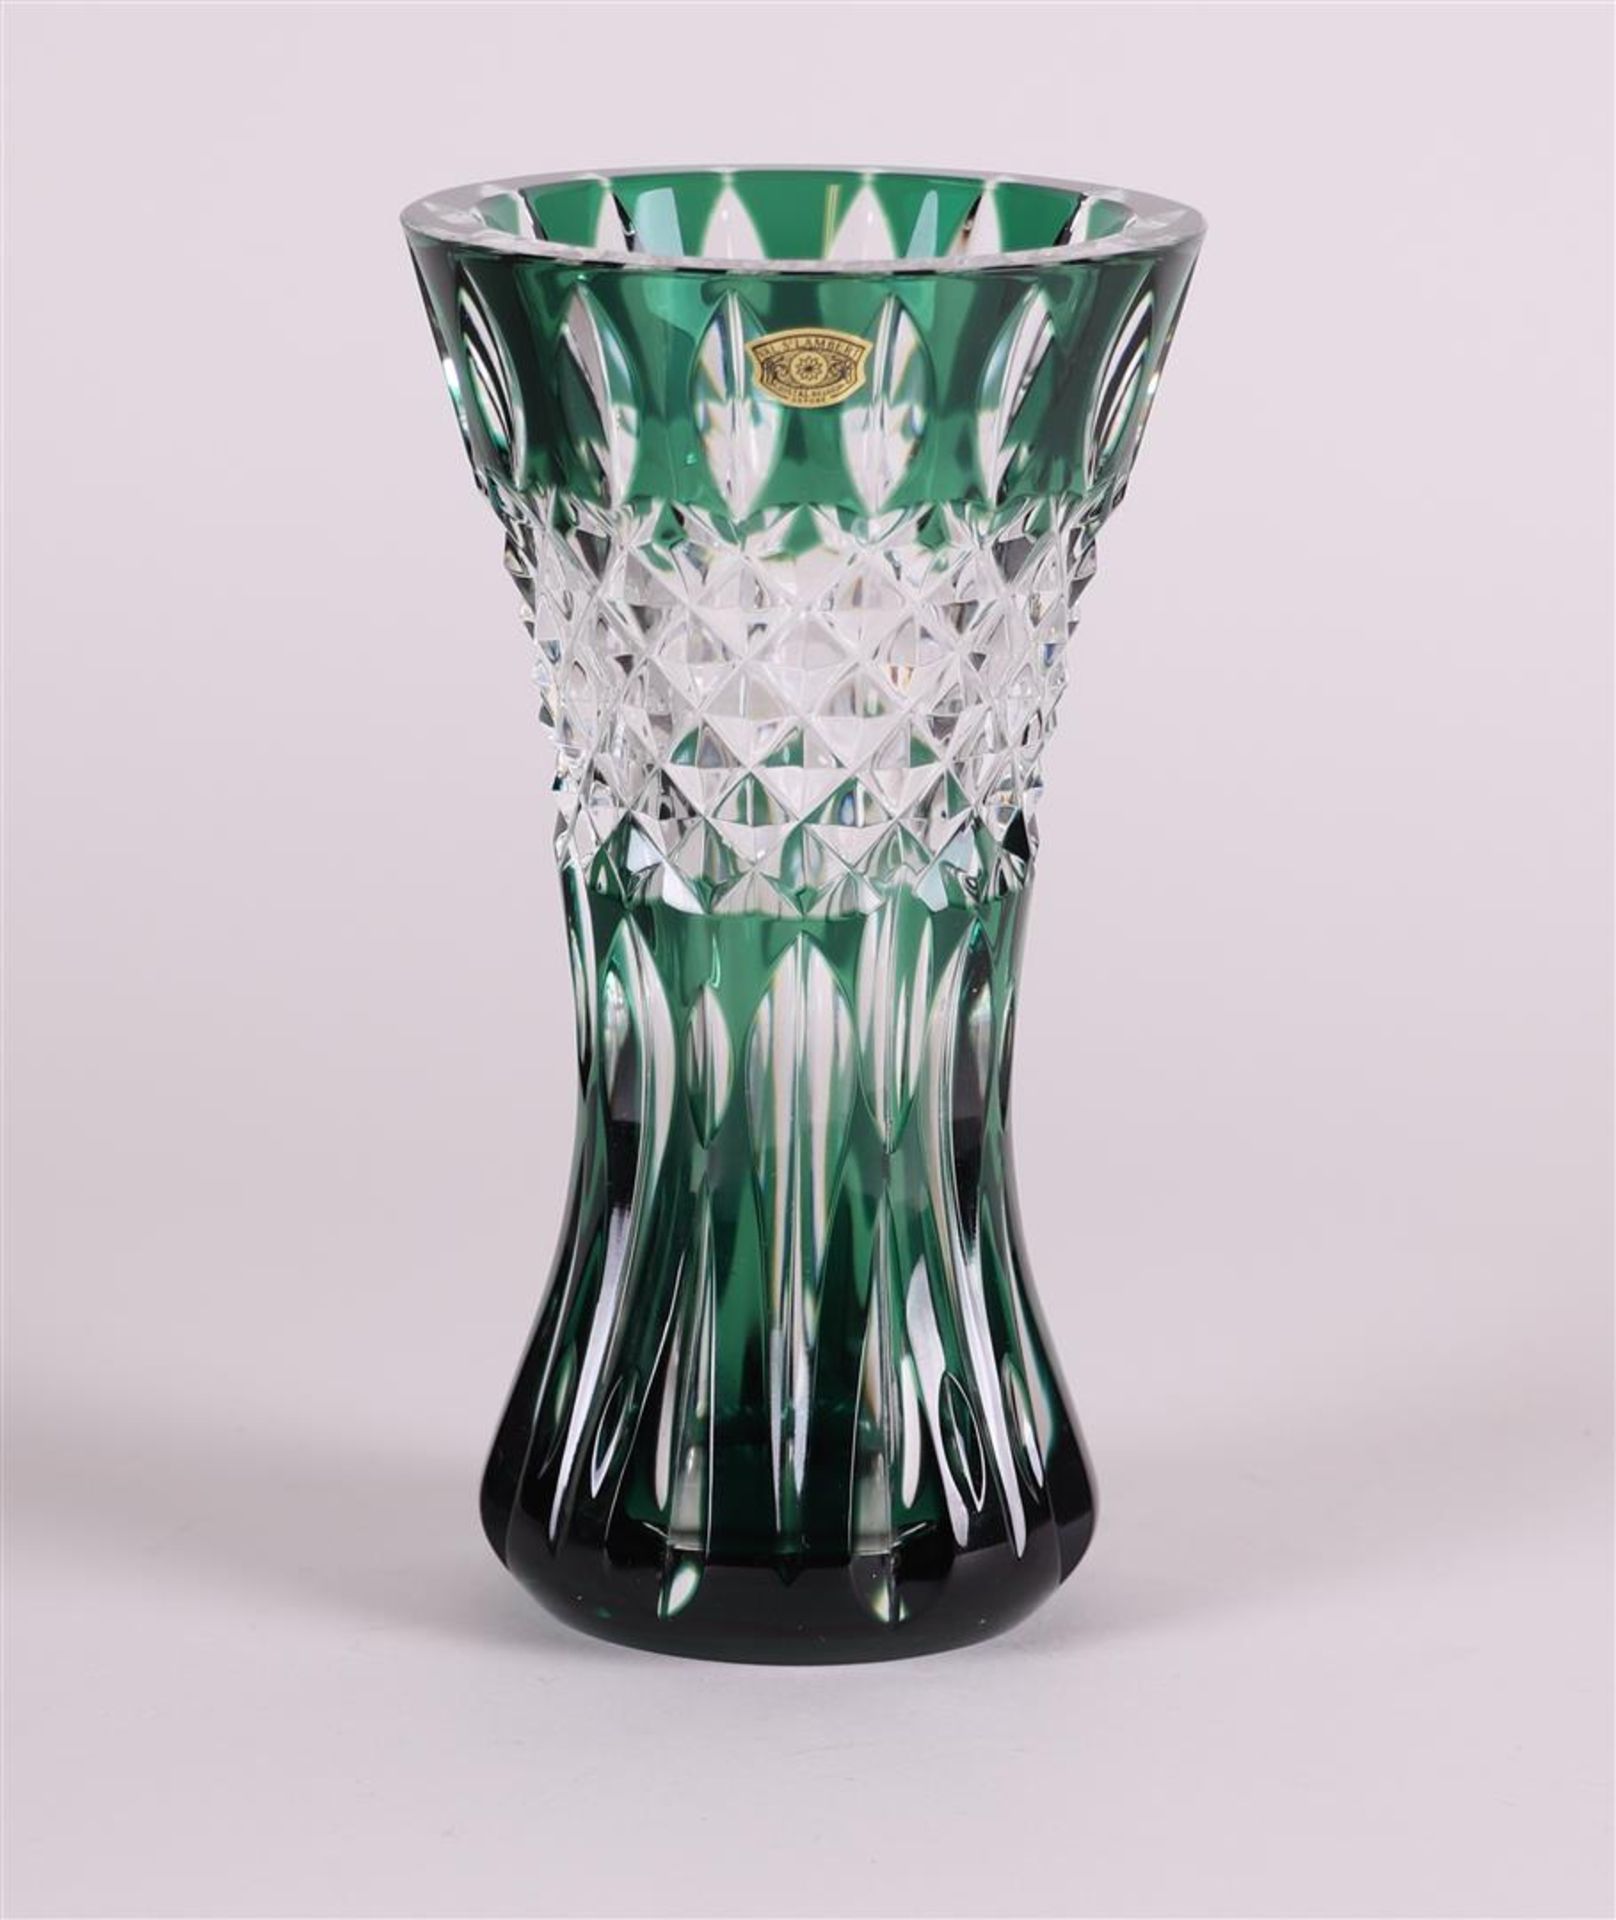 A green crystal cut vase, in original box. Val Saint Lambert.